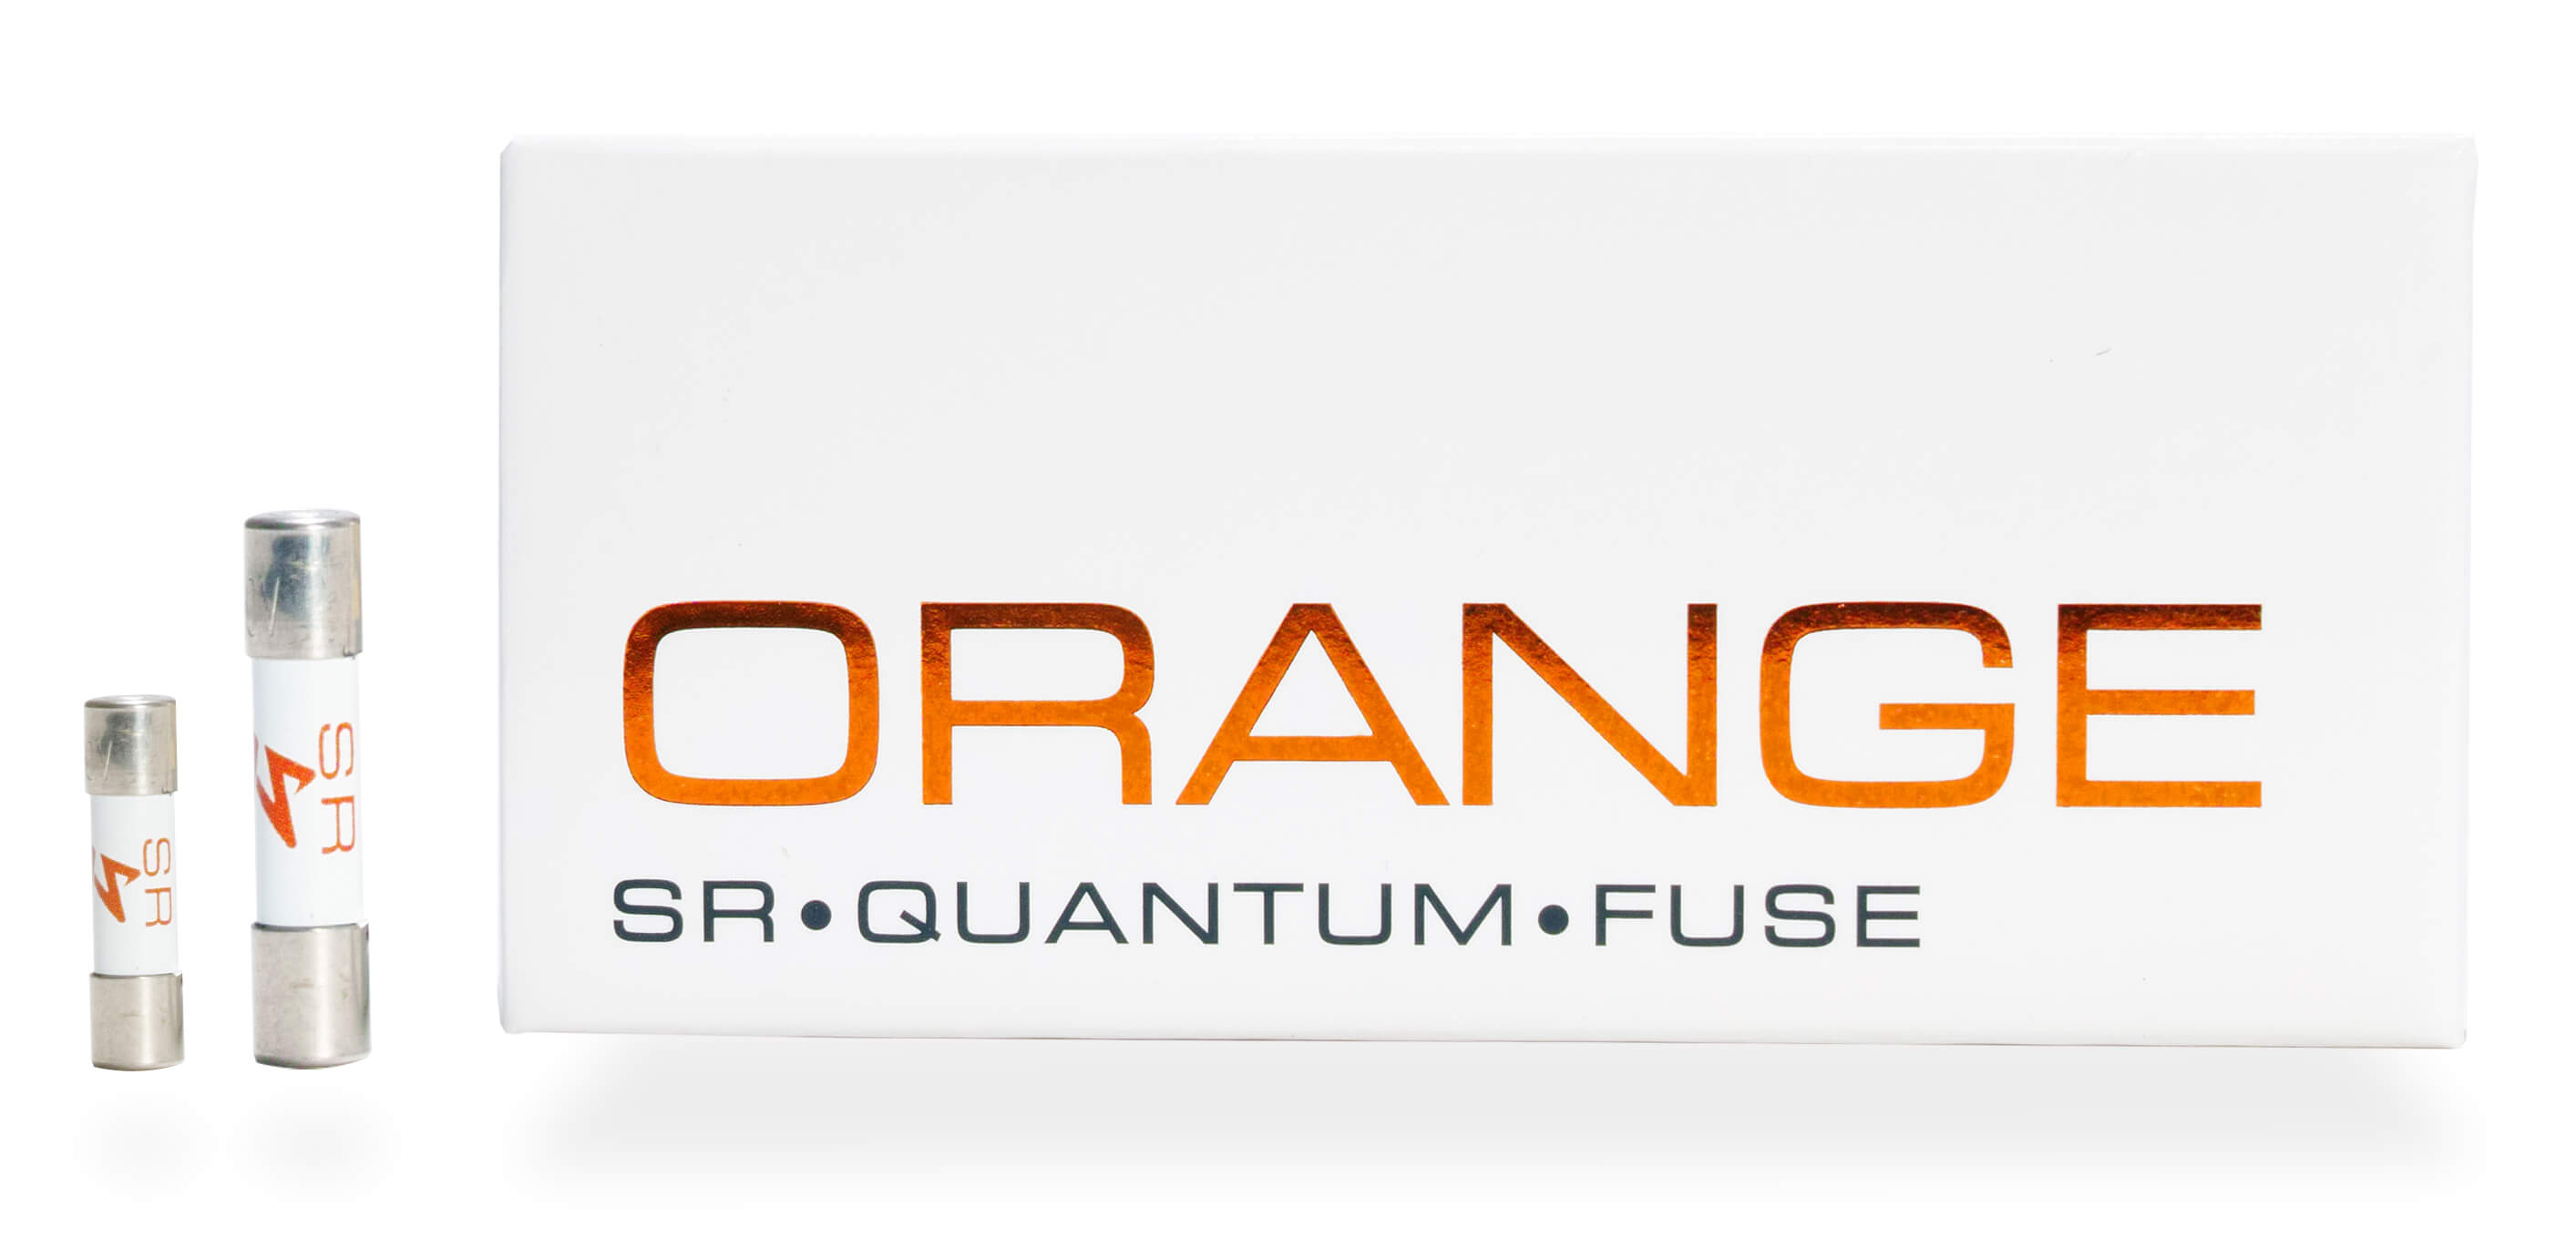 OrangeFuseHero2 1